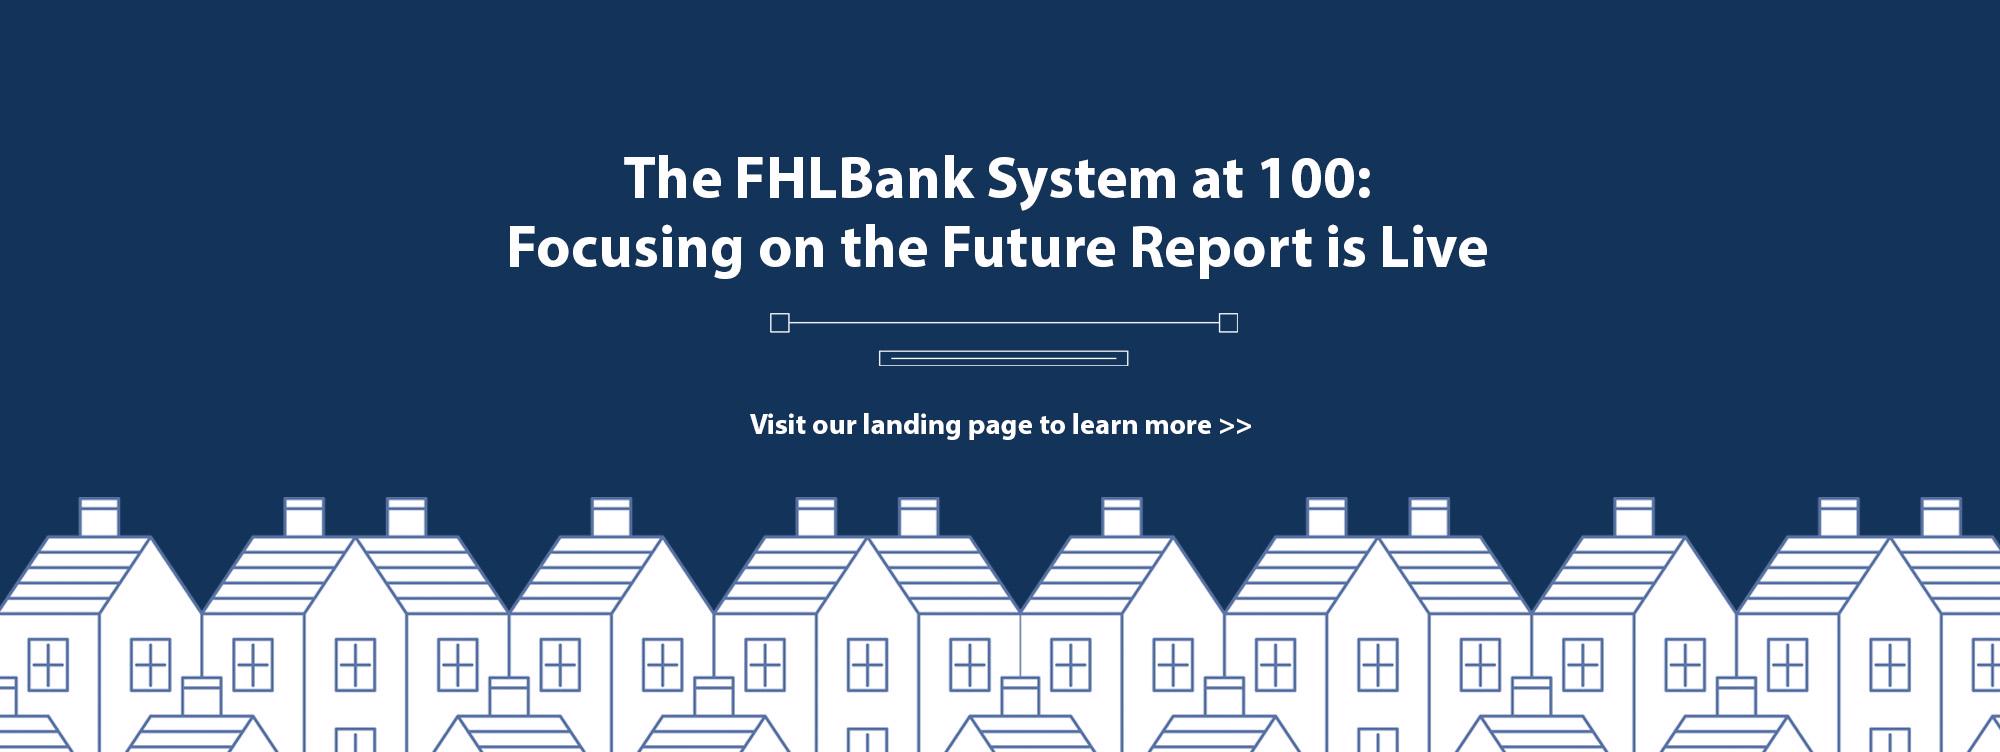 FHLBanks at 100